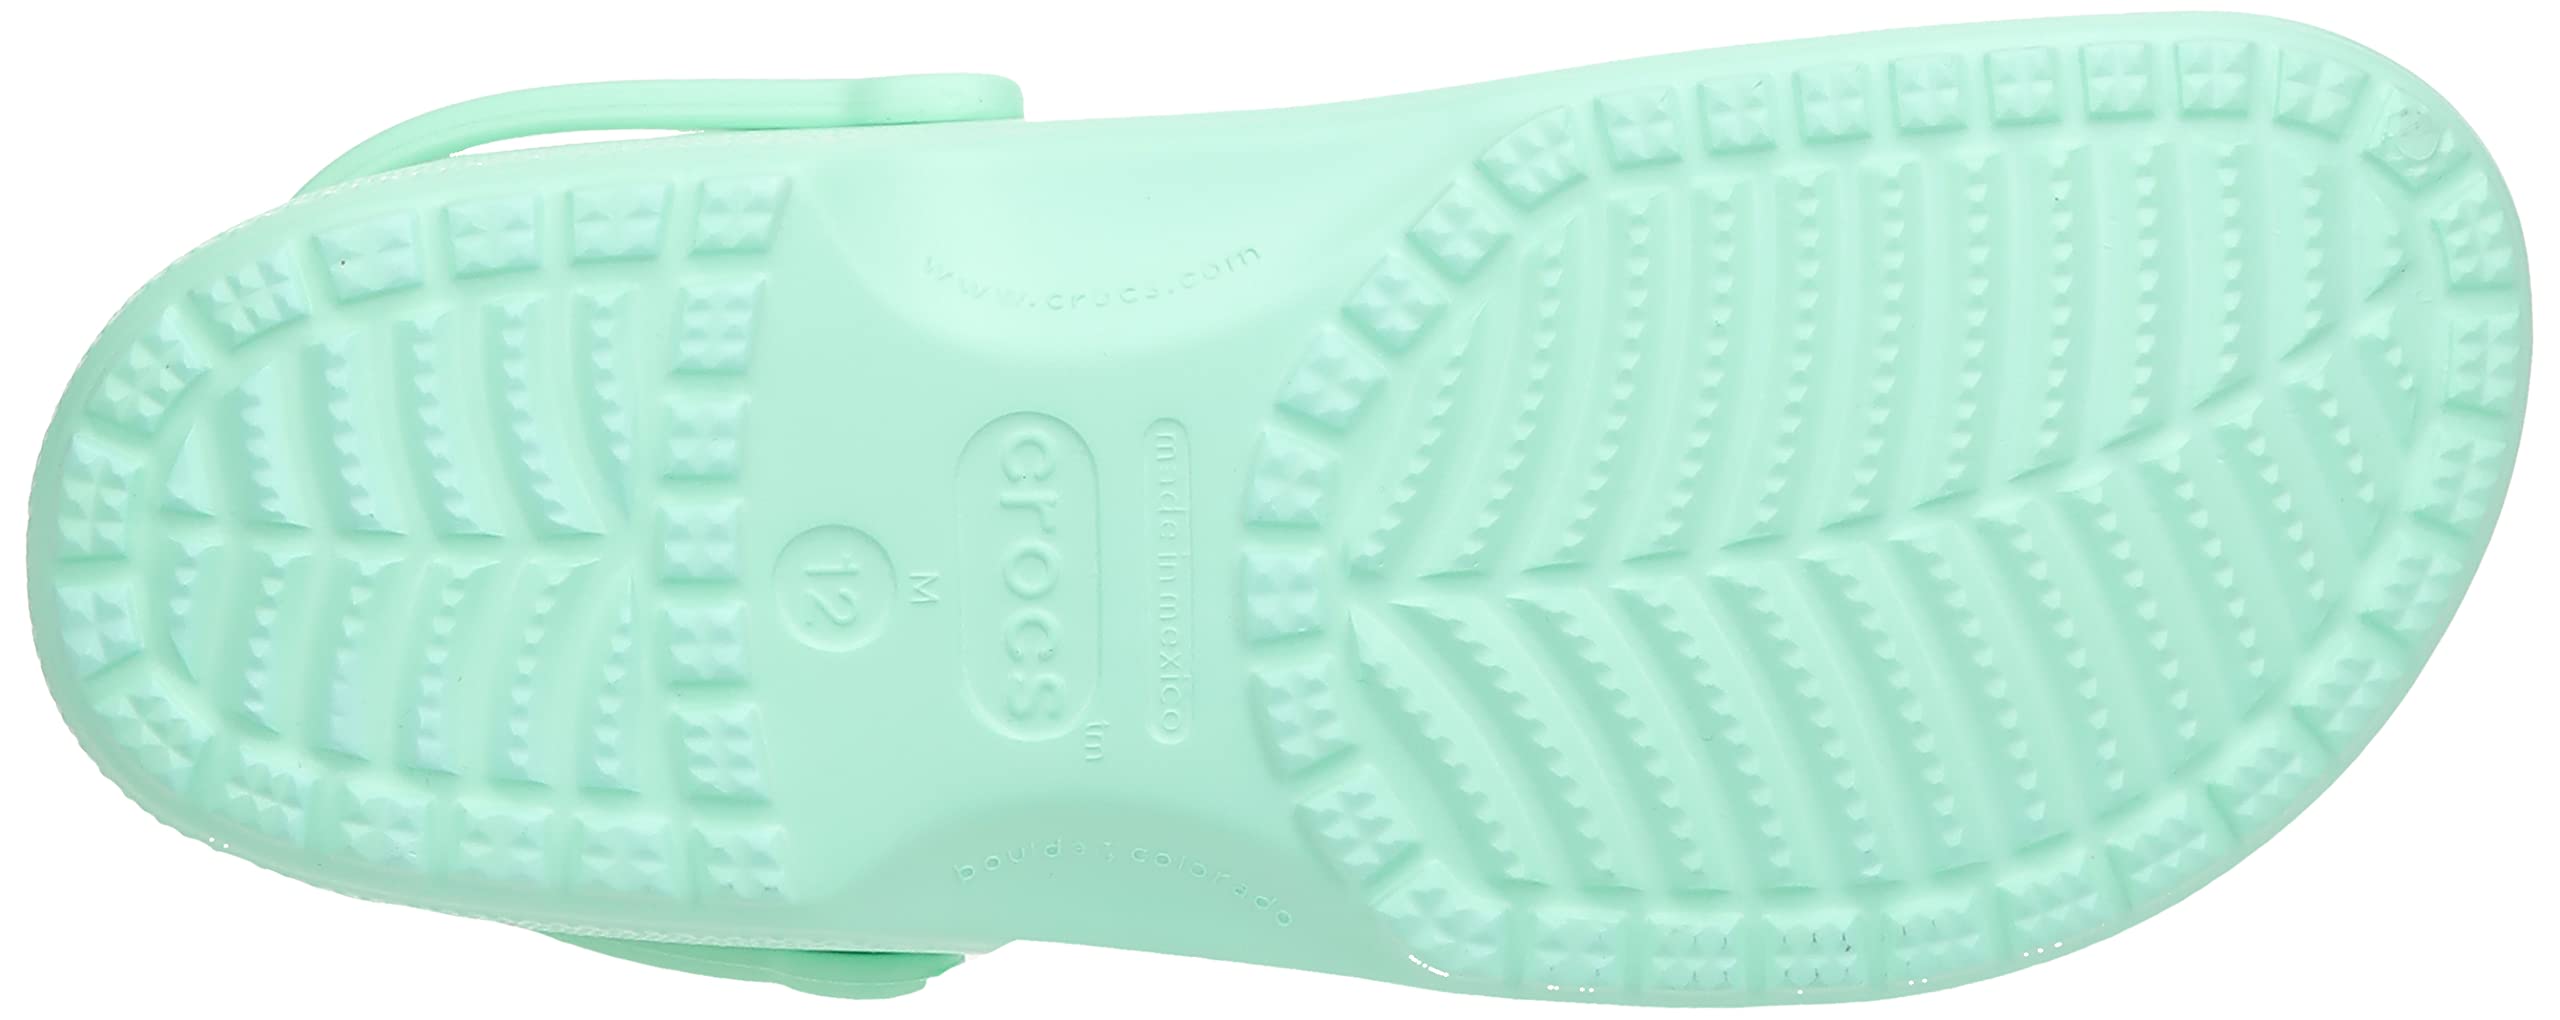 Crocs Unisex Classic Clogs (Retired Colors), New Mint, 10 US Women